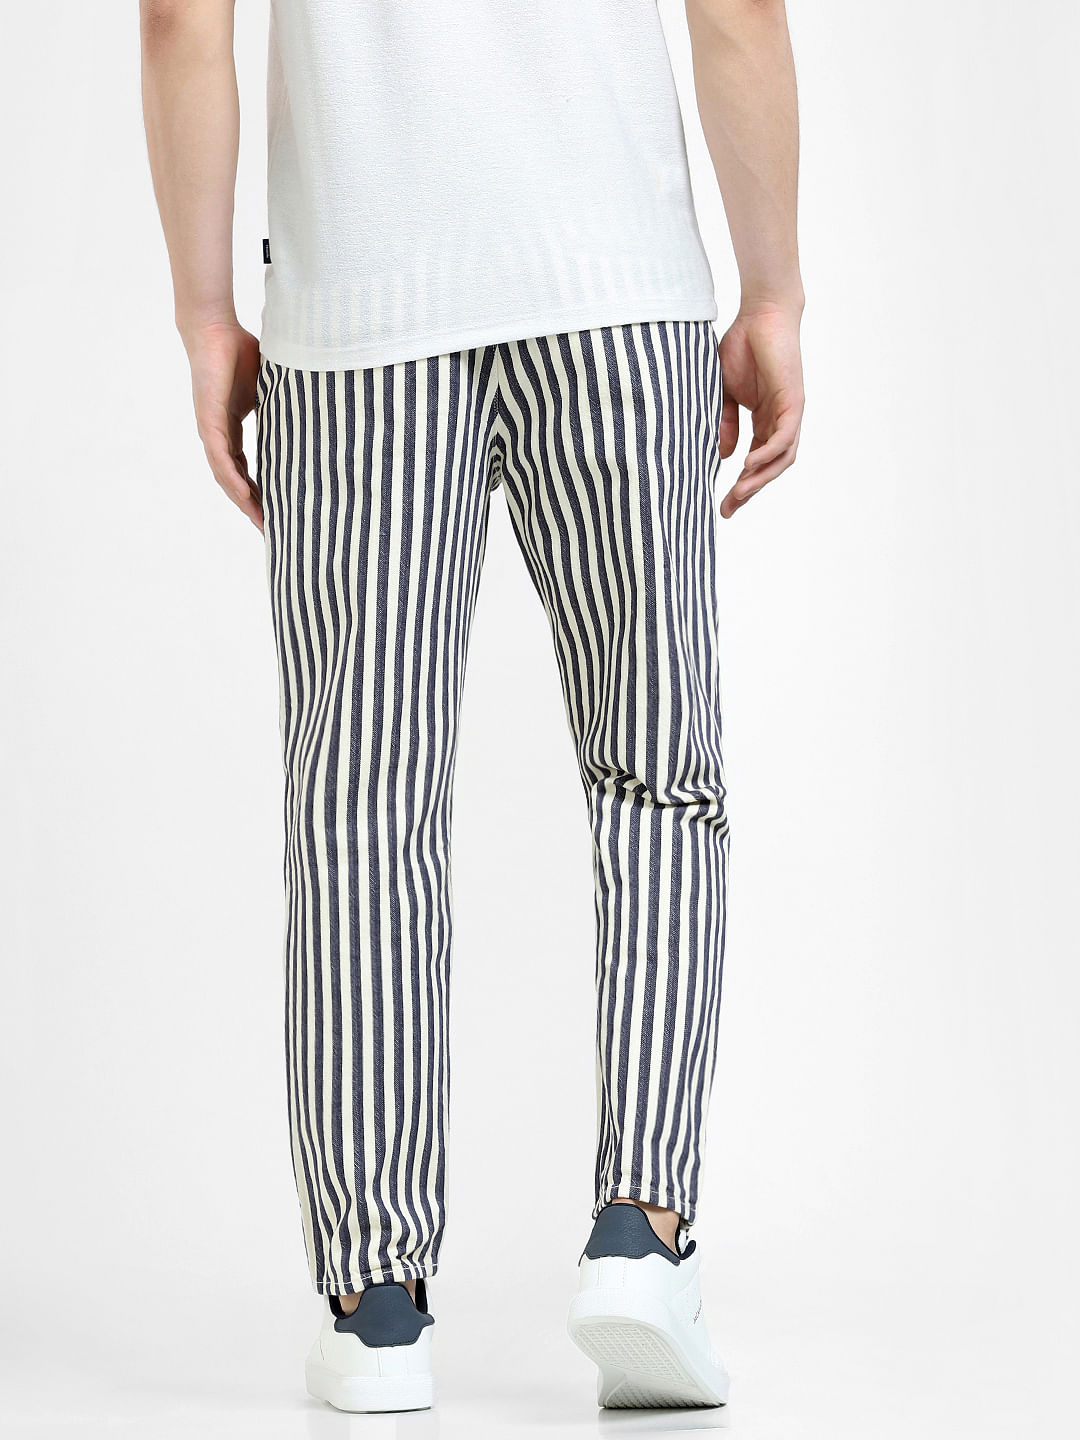 Buy Black  White Track Pants for Men by Garcon Online  Ajiocom